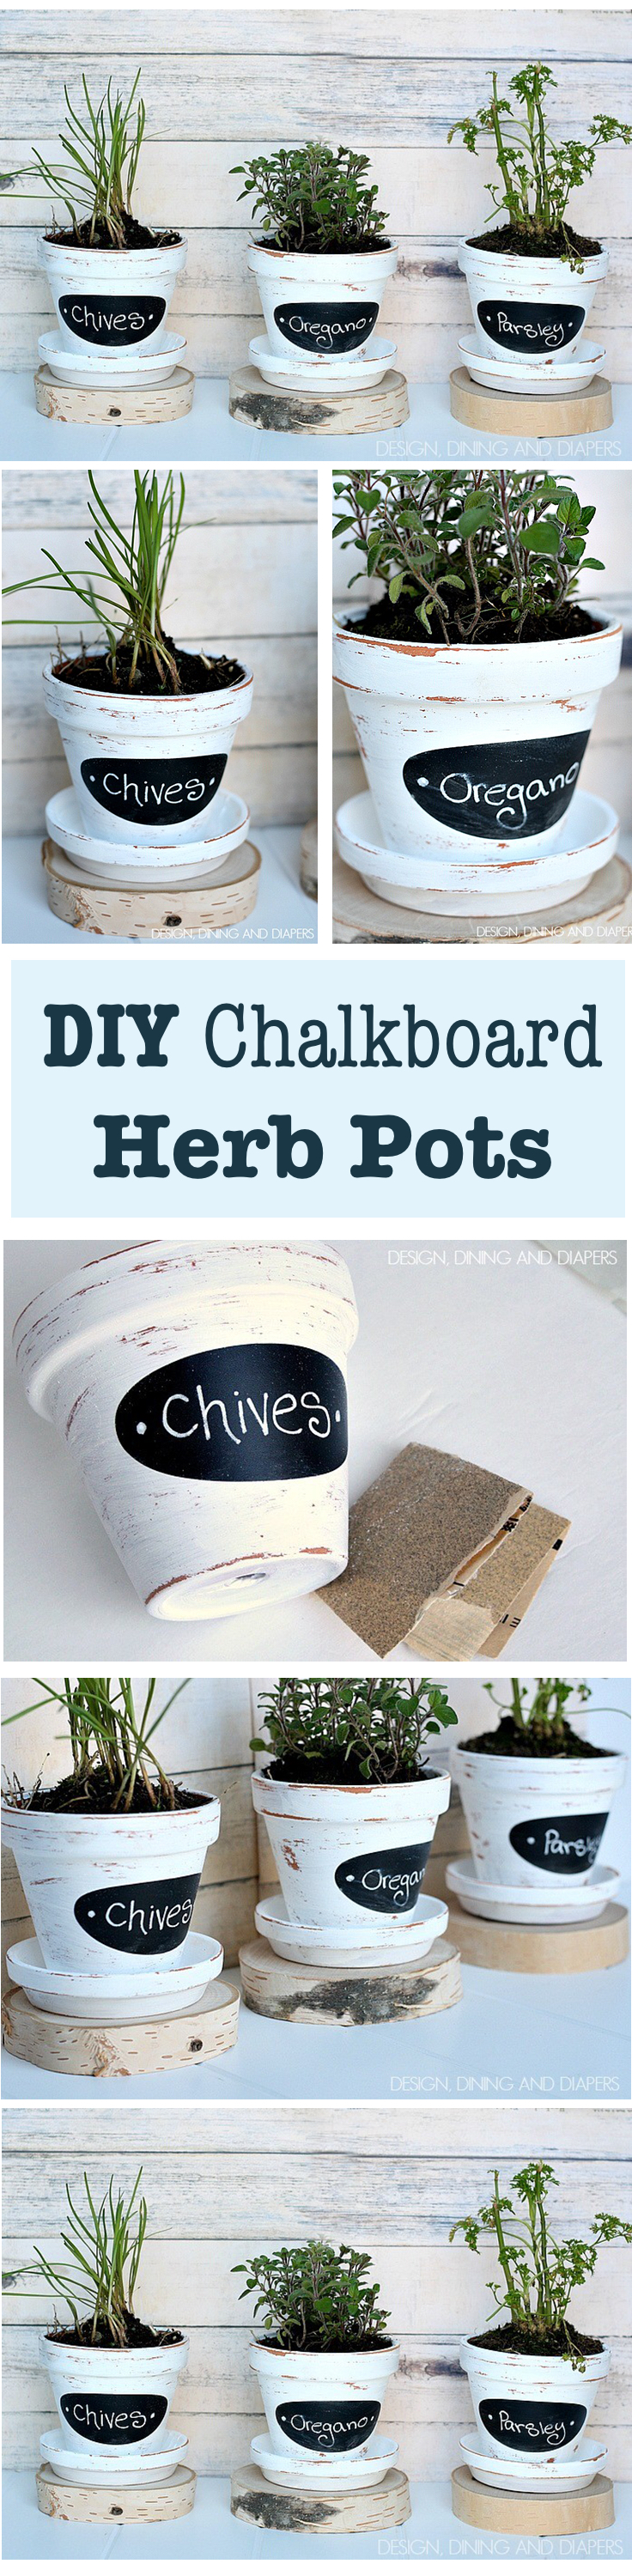  DIY Chalkboard Herb Pots